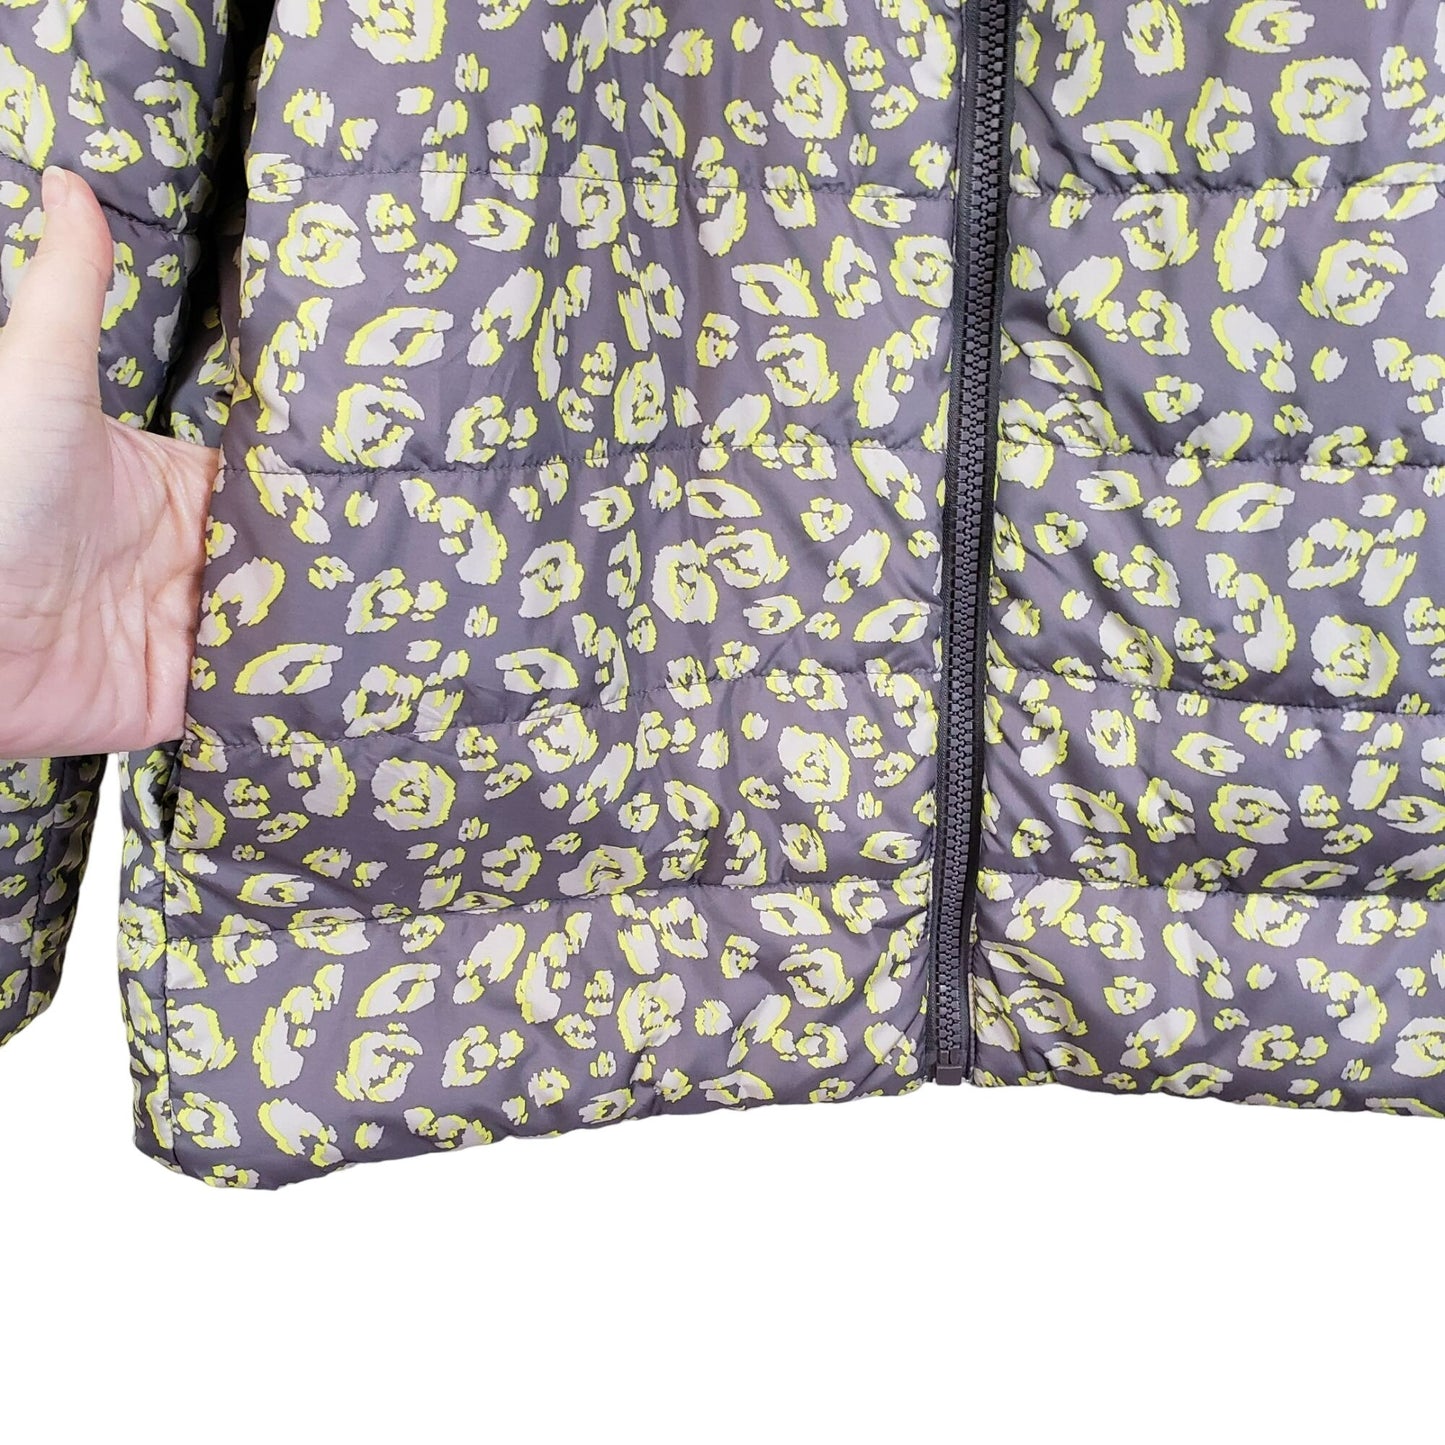 LOGO by Lori Goldstein Reversible Leopard Print Full Zip Puffer Jacket Size Large